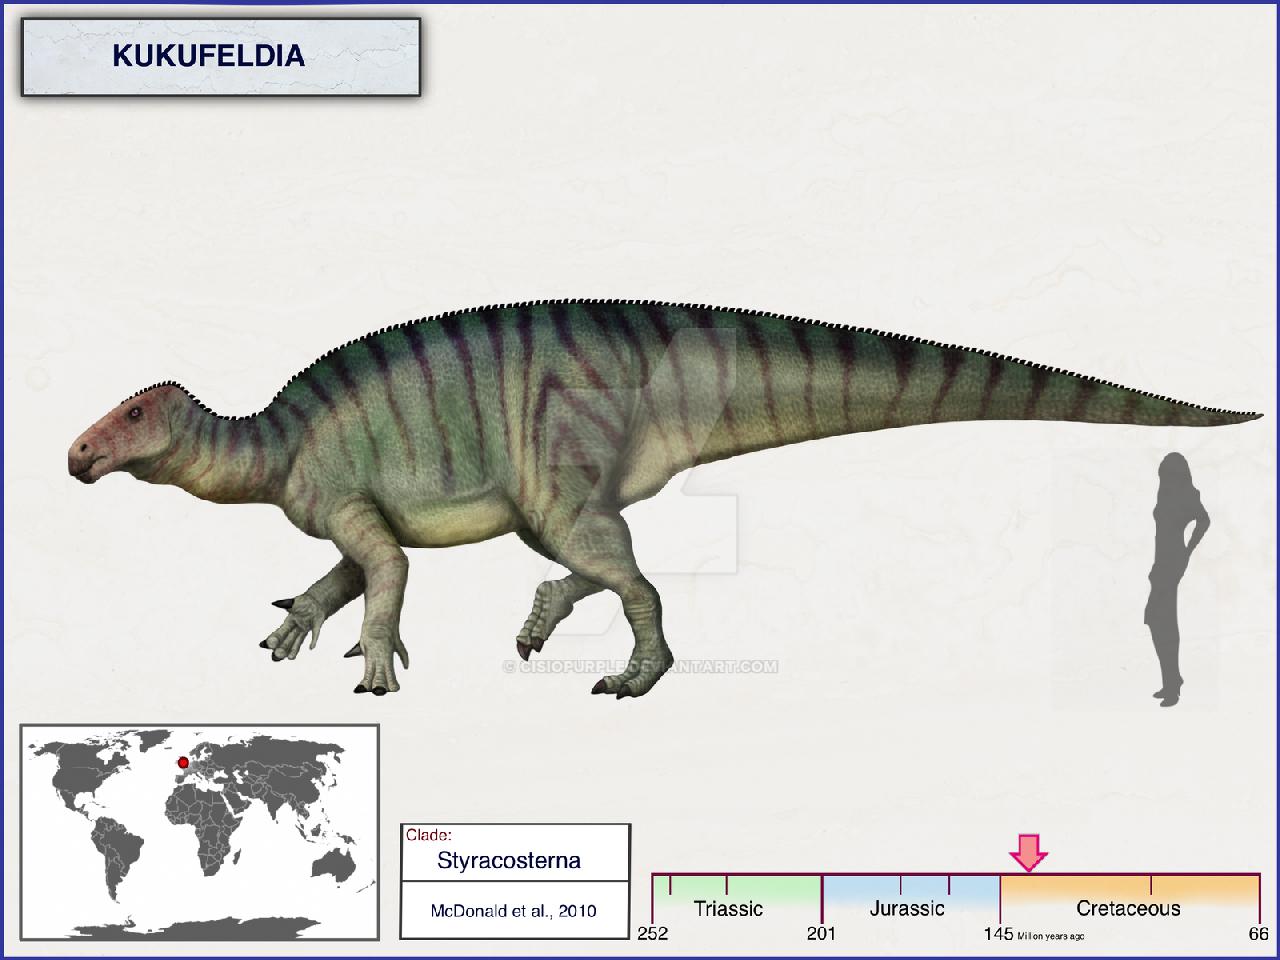 Kukufeldia, Cretaceous
(Меловой период)